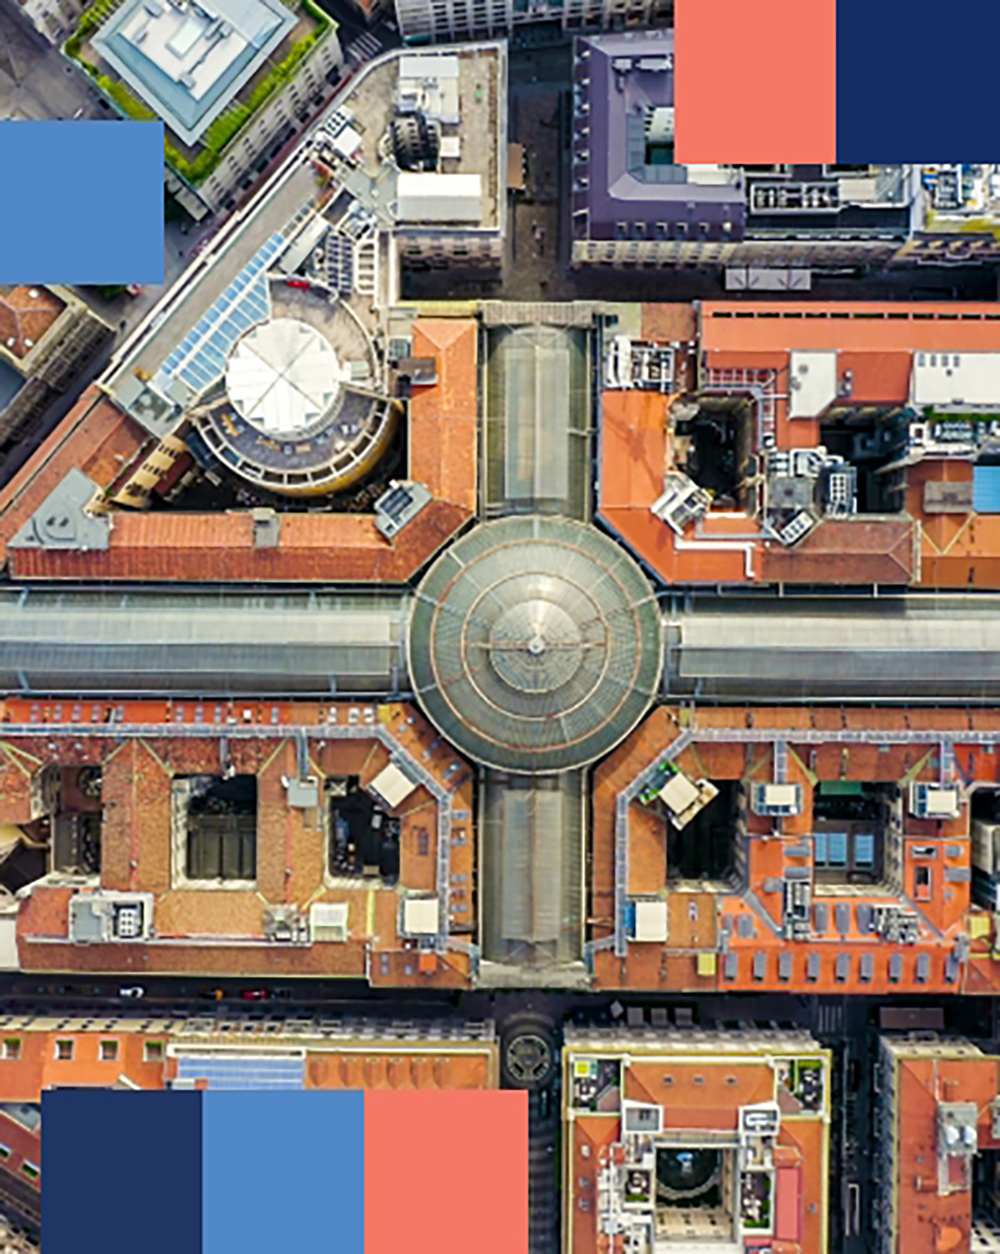 Galleria Vittorio Emanuele II from above - mobile